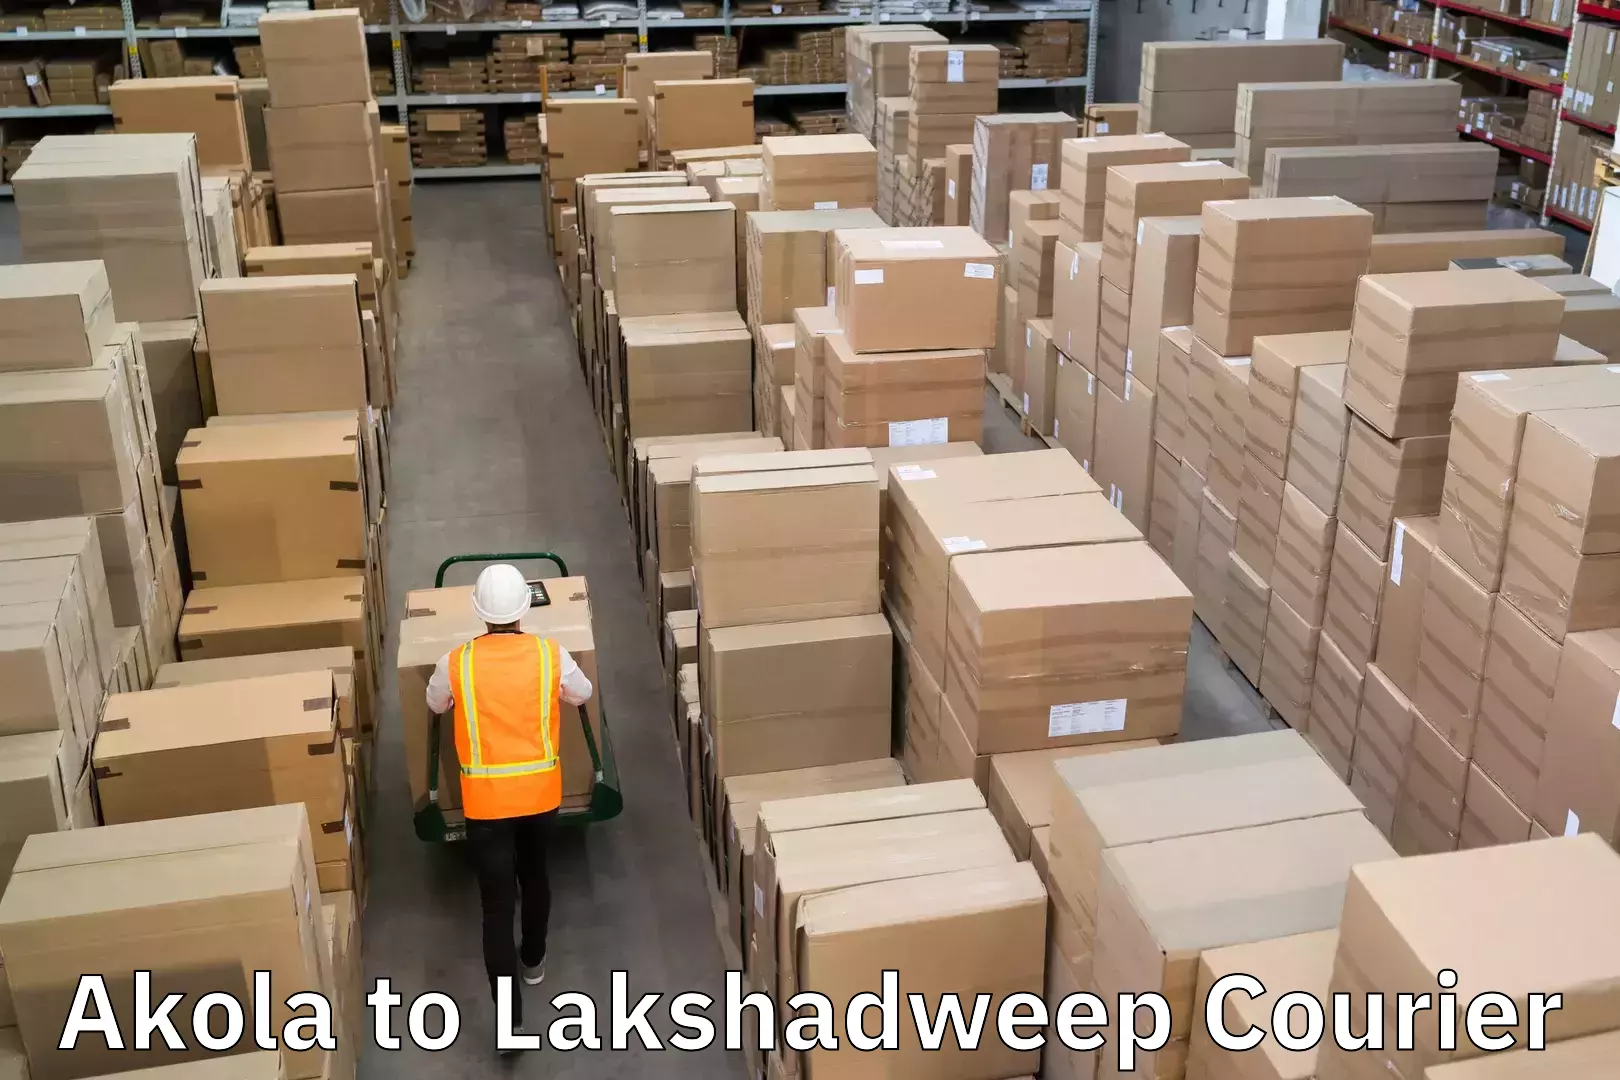 Package delivery network Akola to Lakshadweep